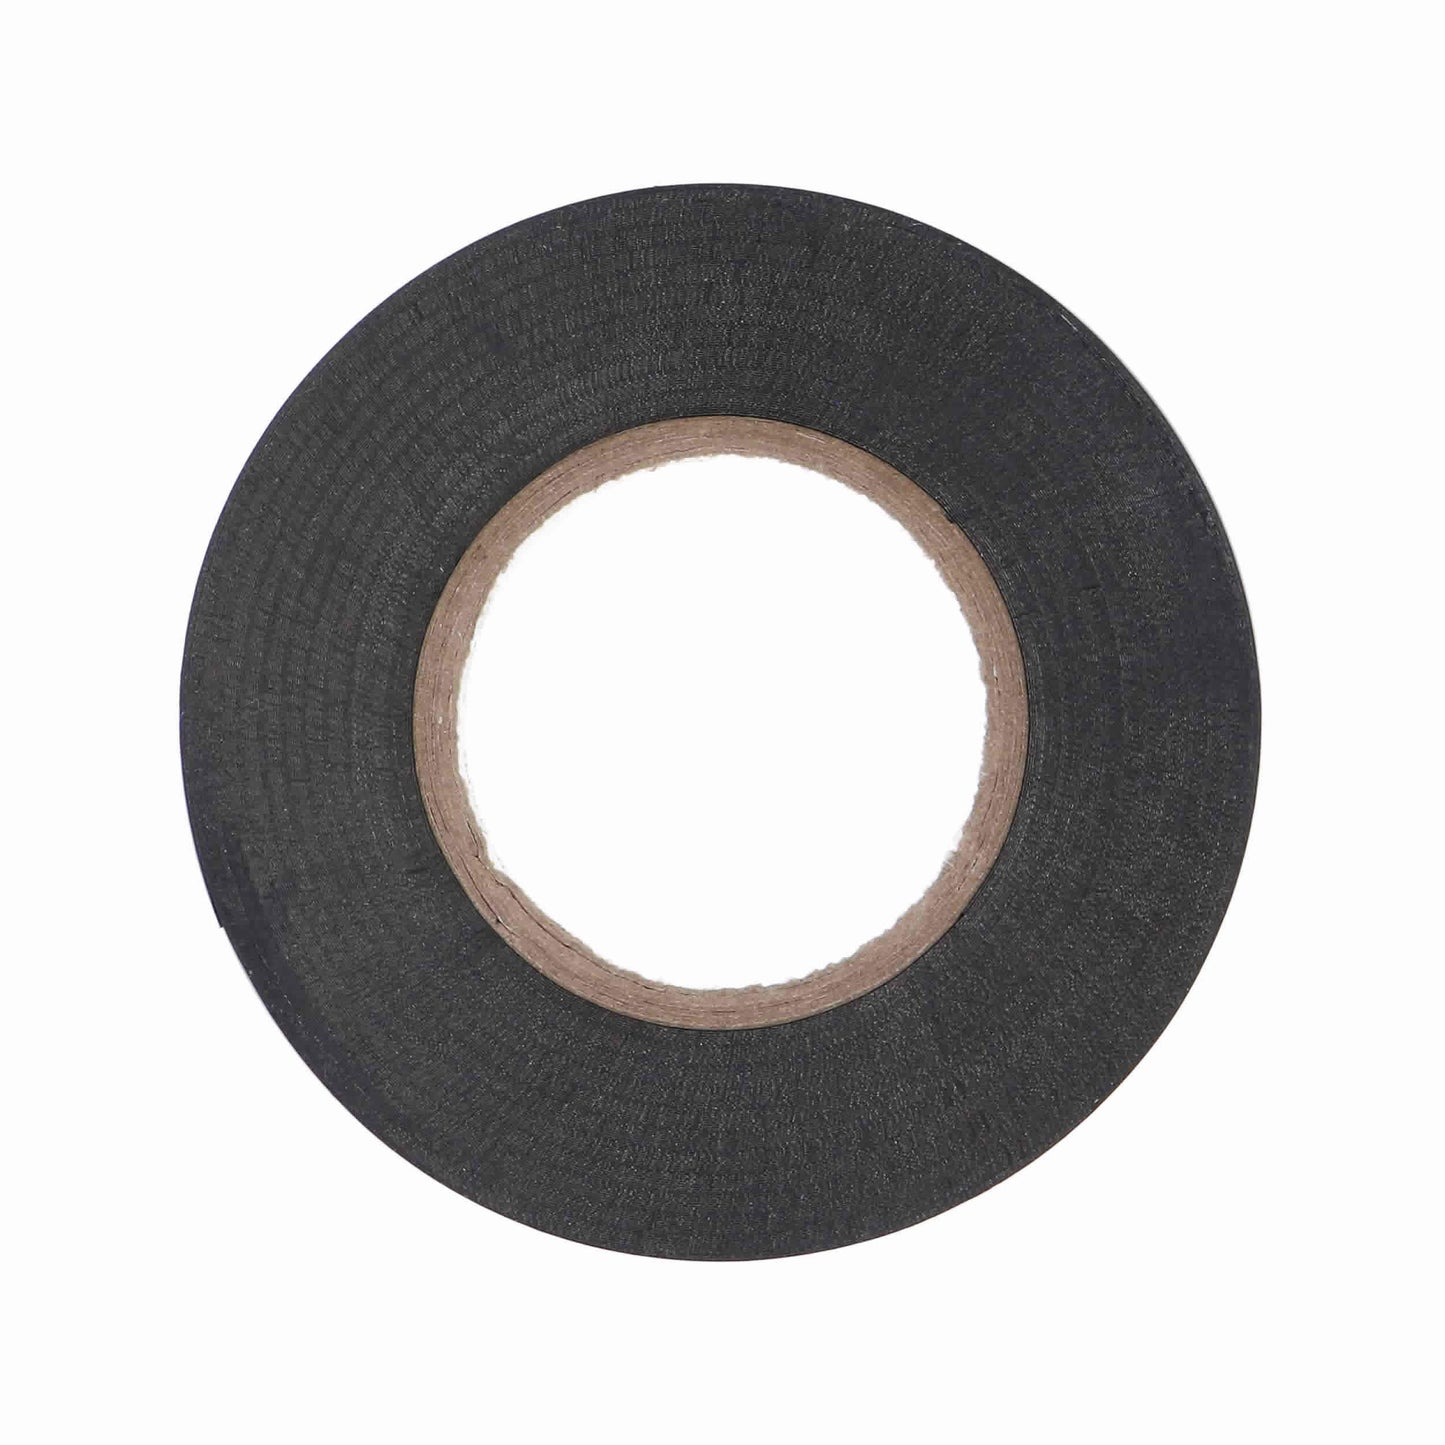 3M Temflex 1776 Vinyl Black Electrical Tape UL 3/4" x 60' FT - Sleeve of 10 - USA